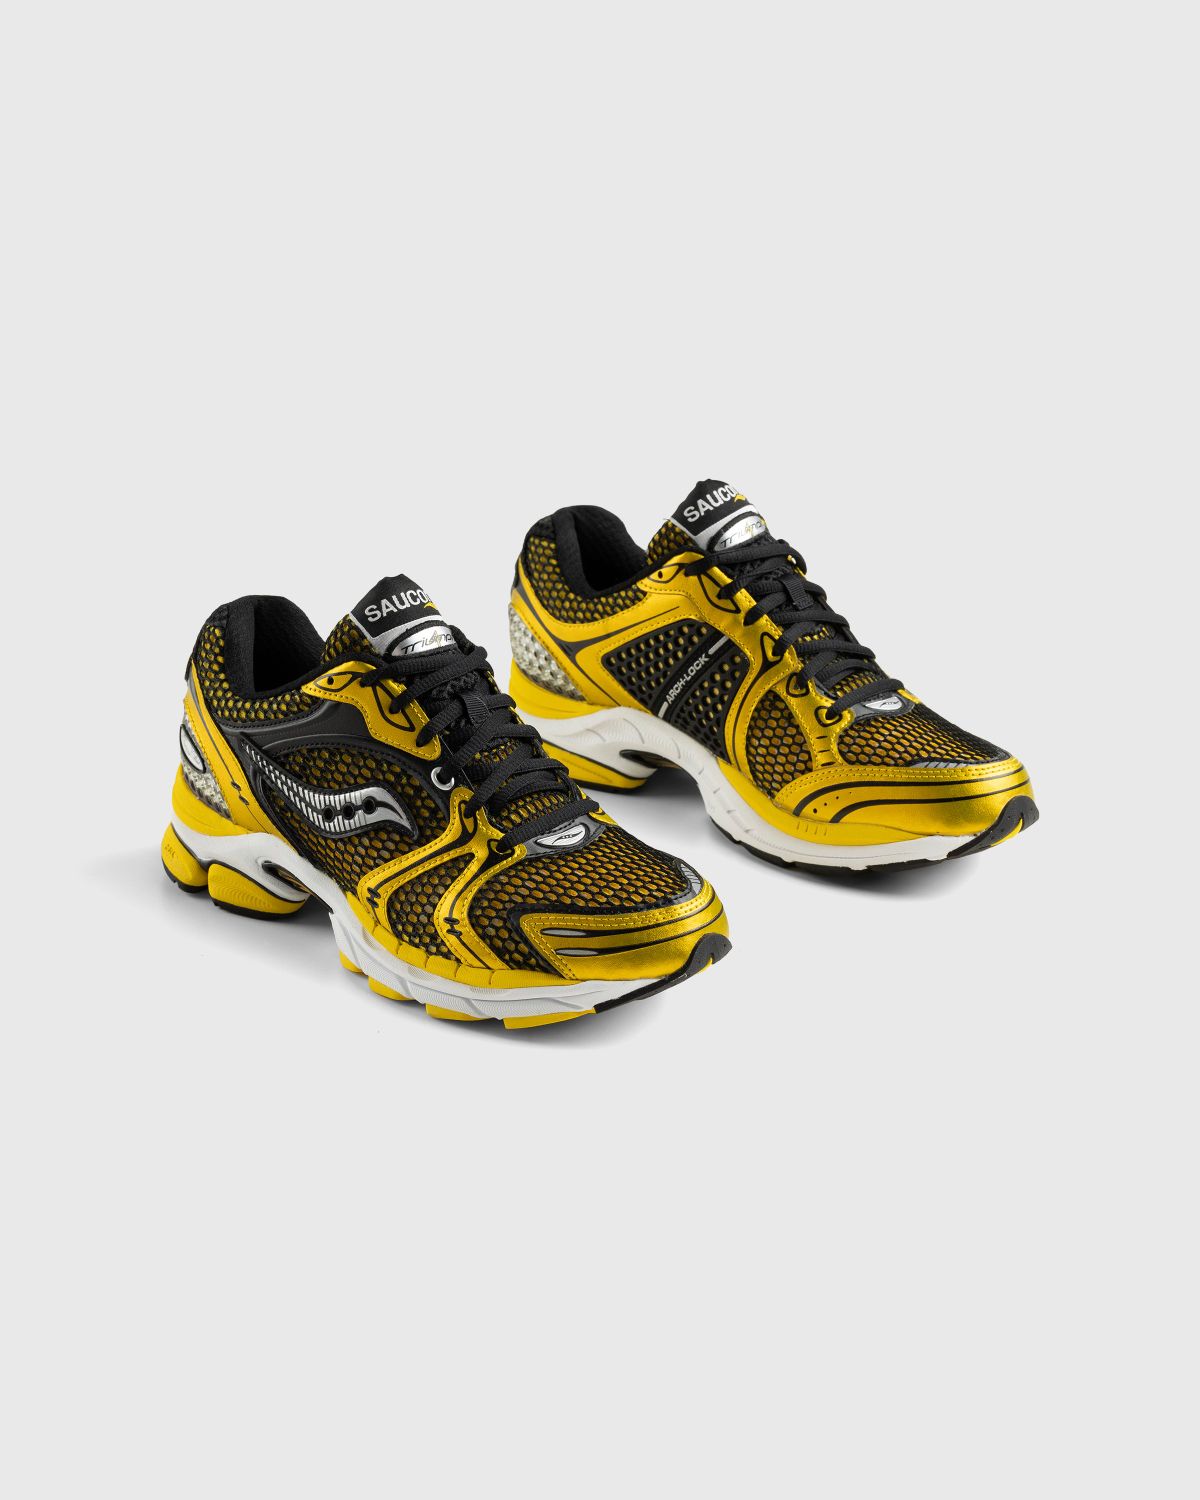 Saucony – ProGrid Triumph 4 Lemon - Low Top Sneakers - Yellow - Image 3